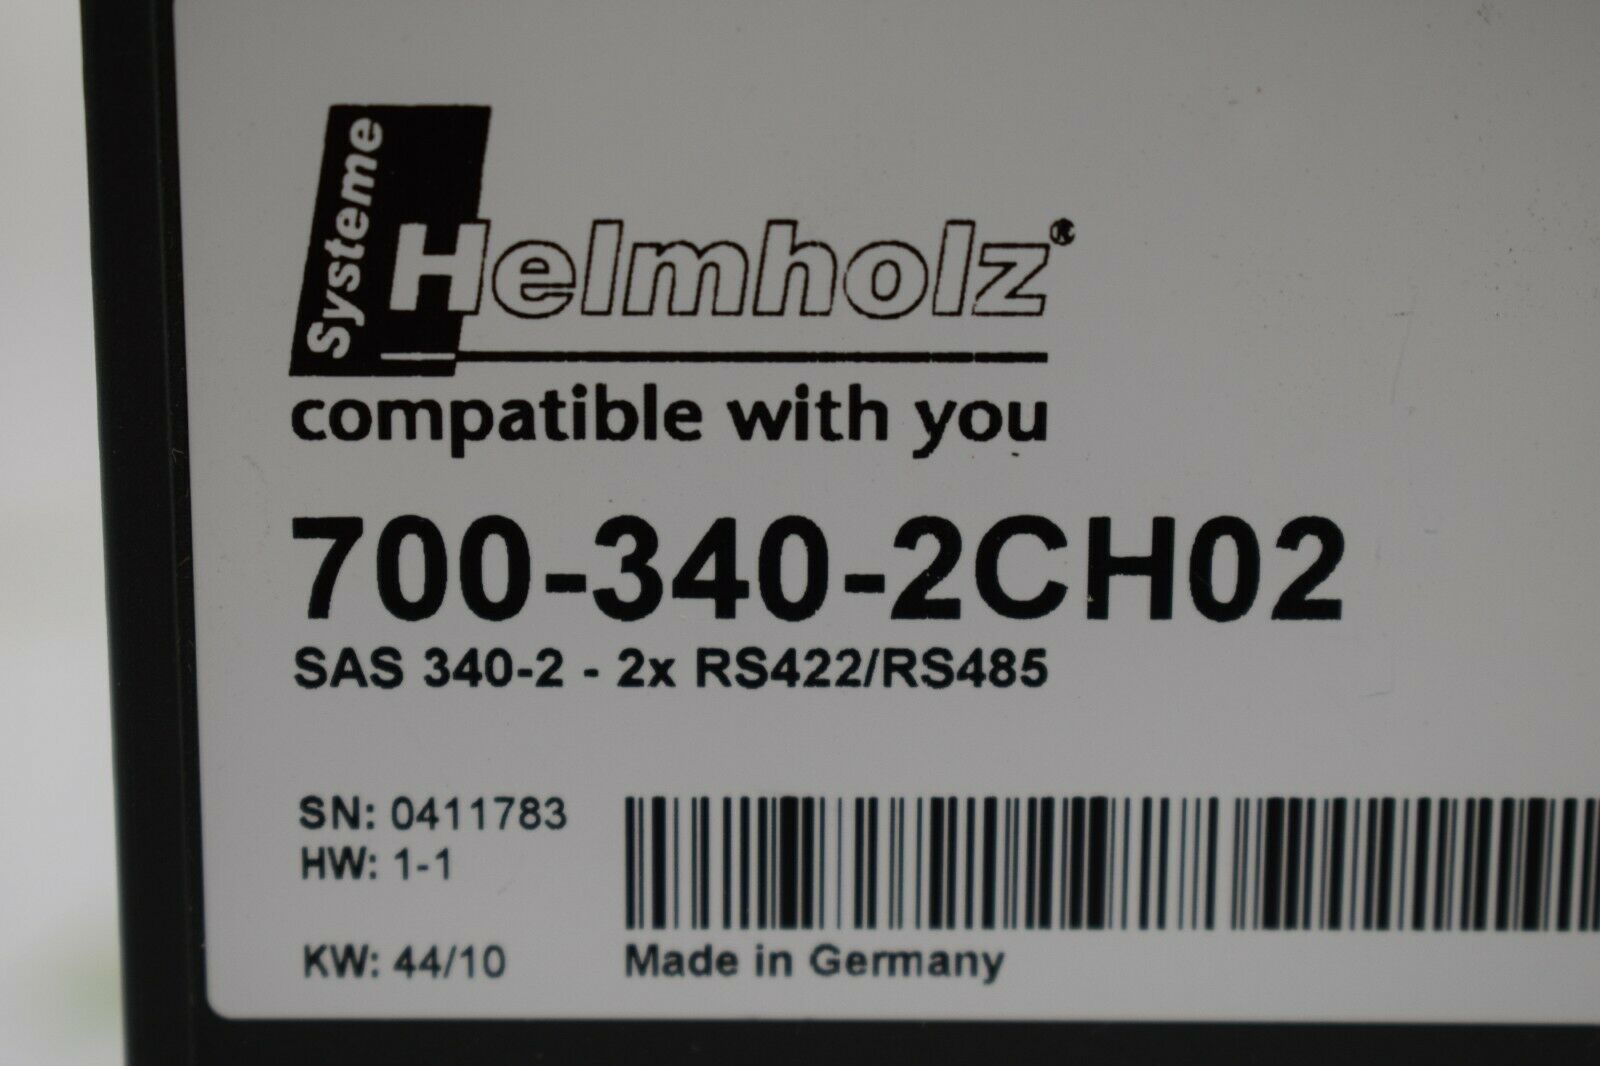 Helmholz 700-340-2CH02